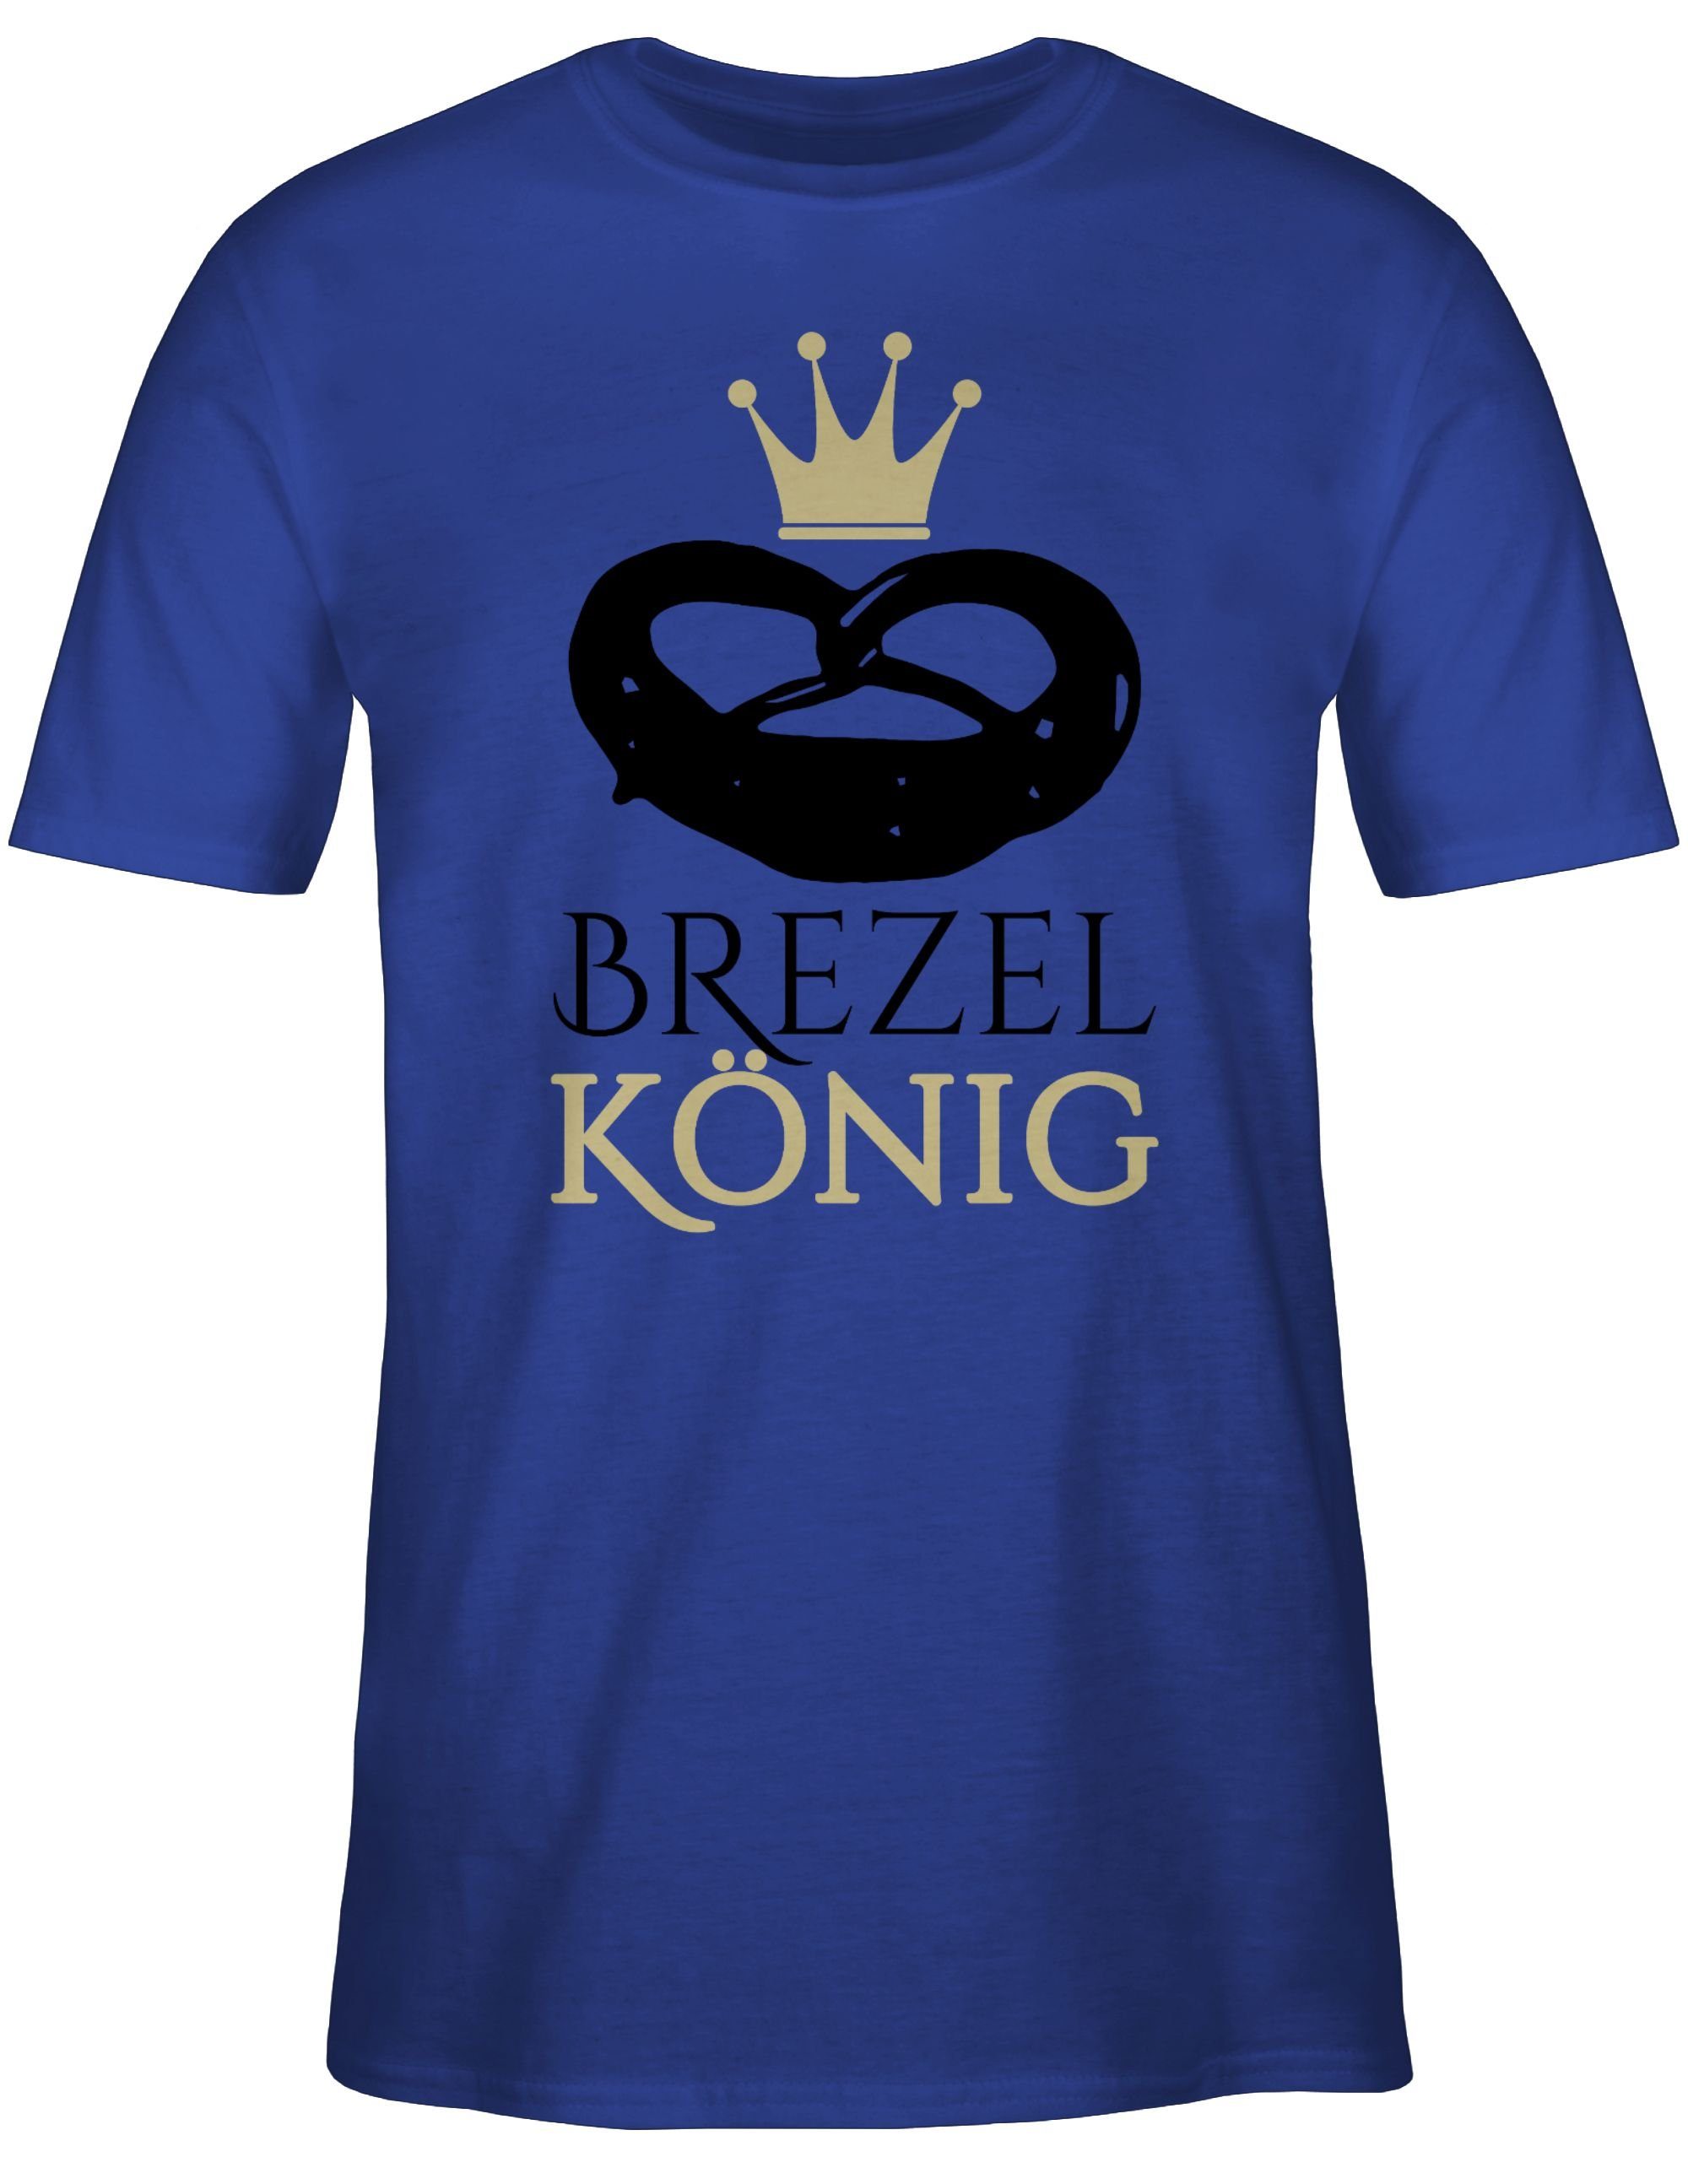 Shirtracer T-Shirt König Herren Oktoberfest für 3 Mode Royalblau Brezel